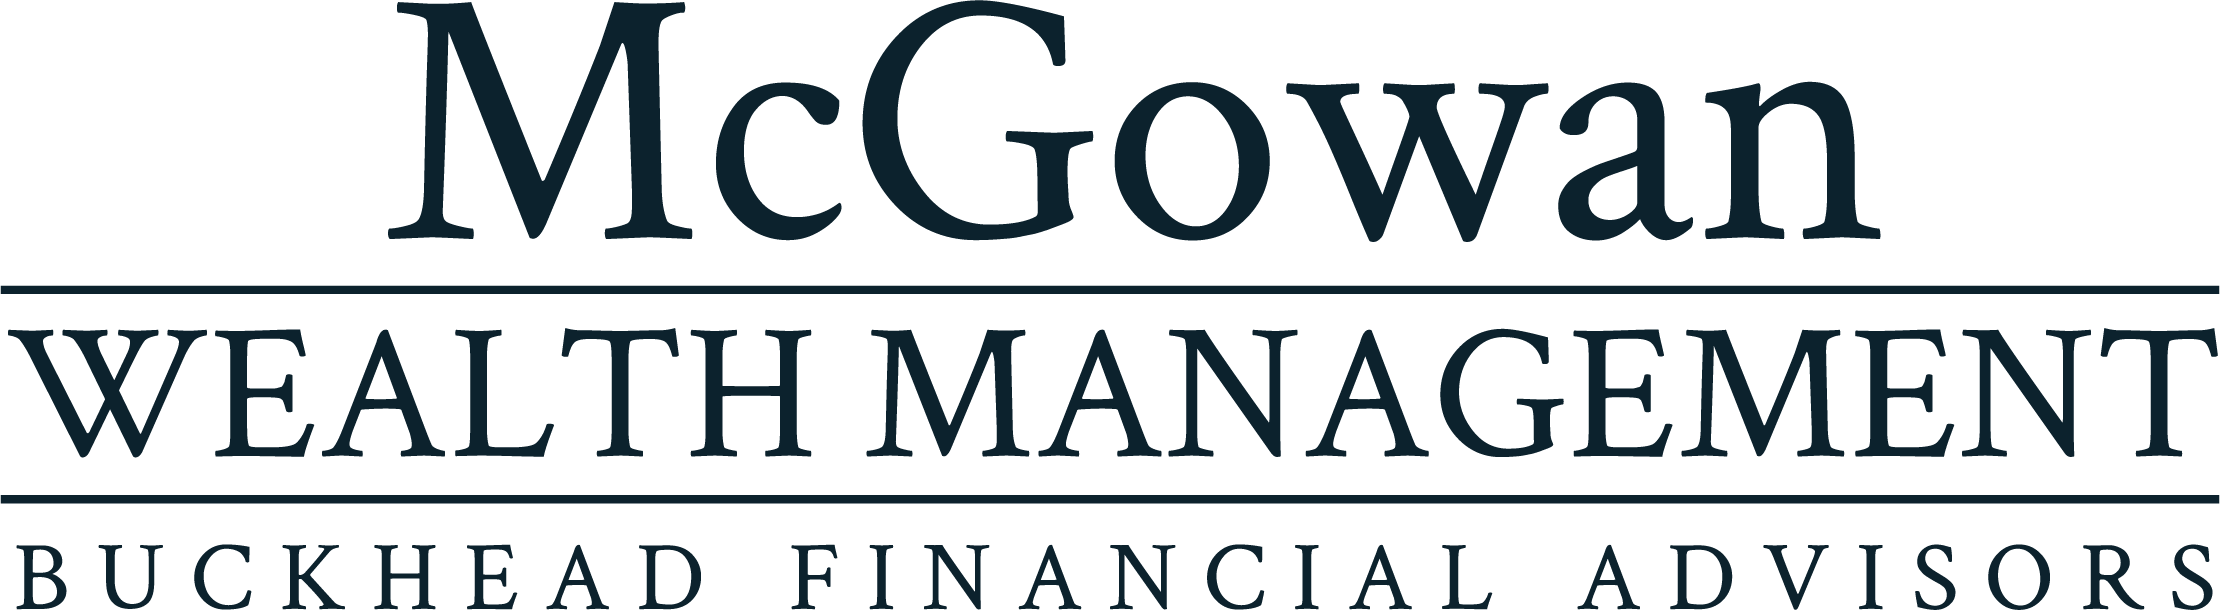 McGowan Wealth Management, Buckhead Financial Advisors Homepage